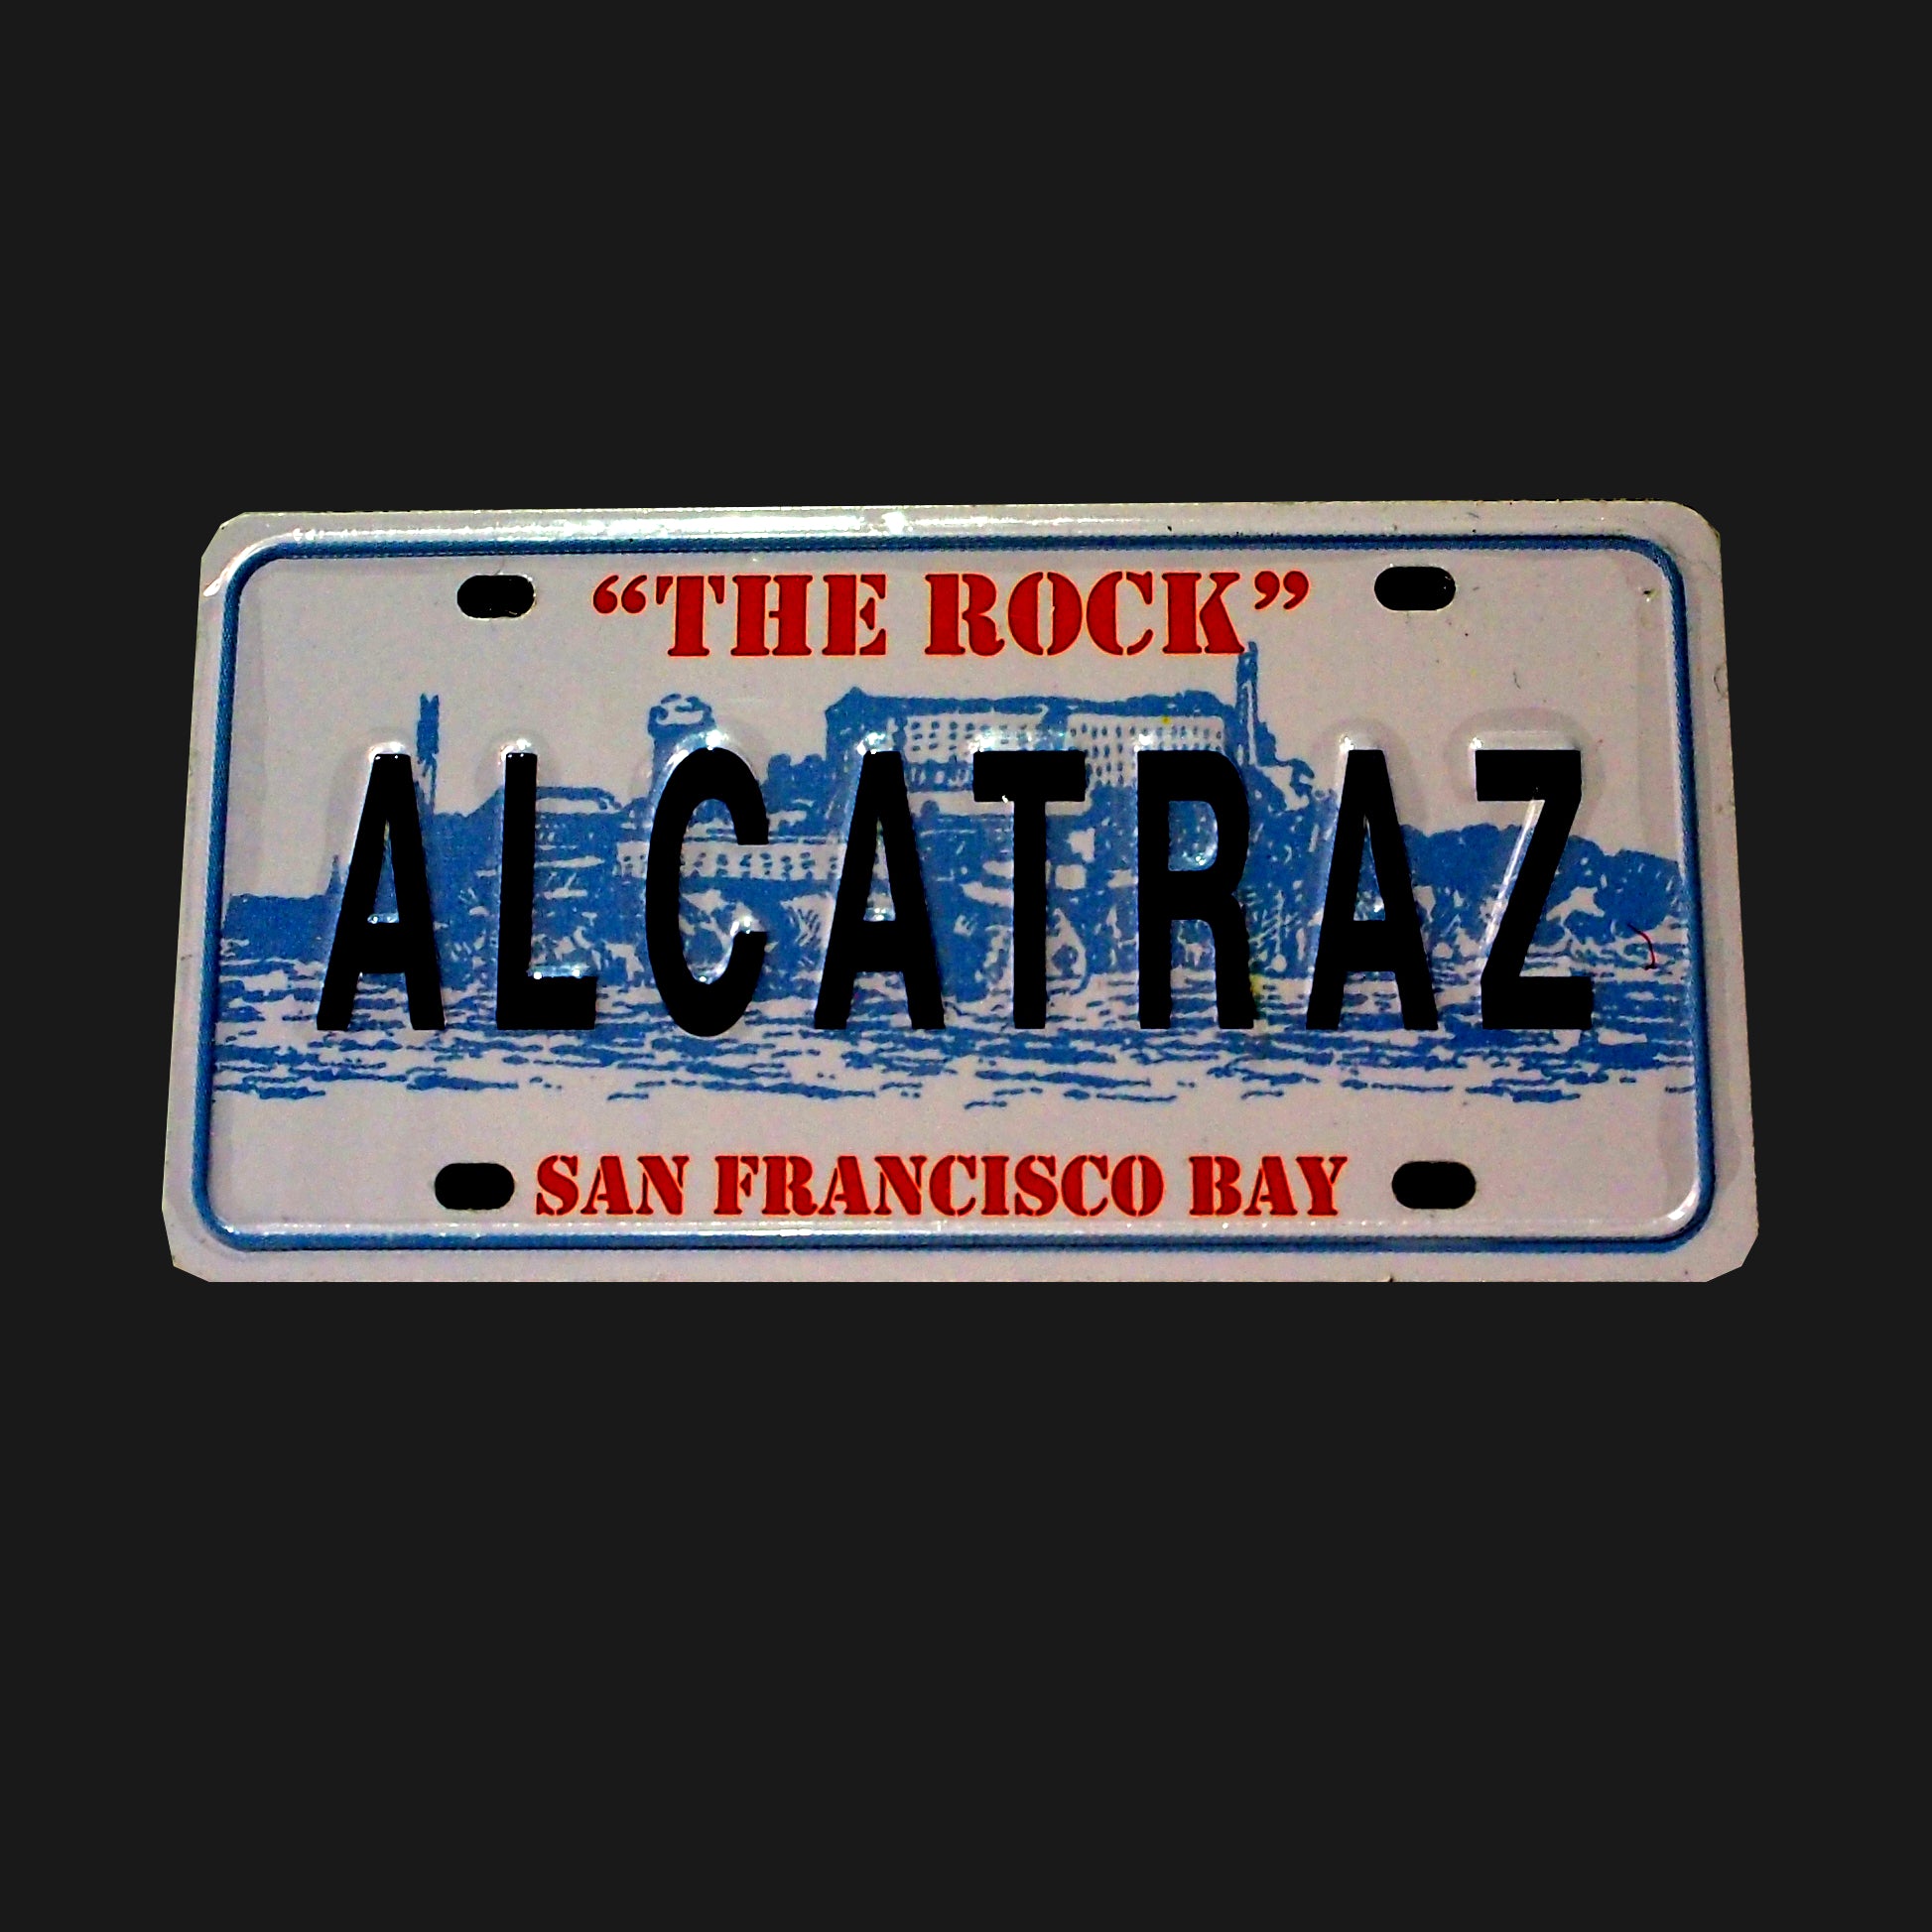 Alcatraz "The Rock" Mini license plate shape magnet 1.5" x 3".